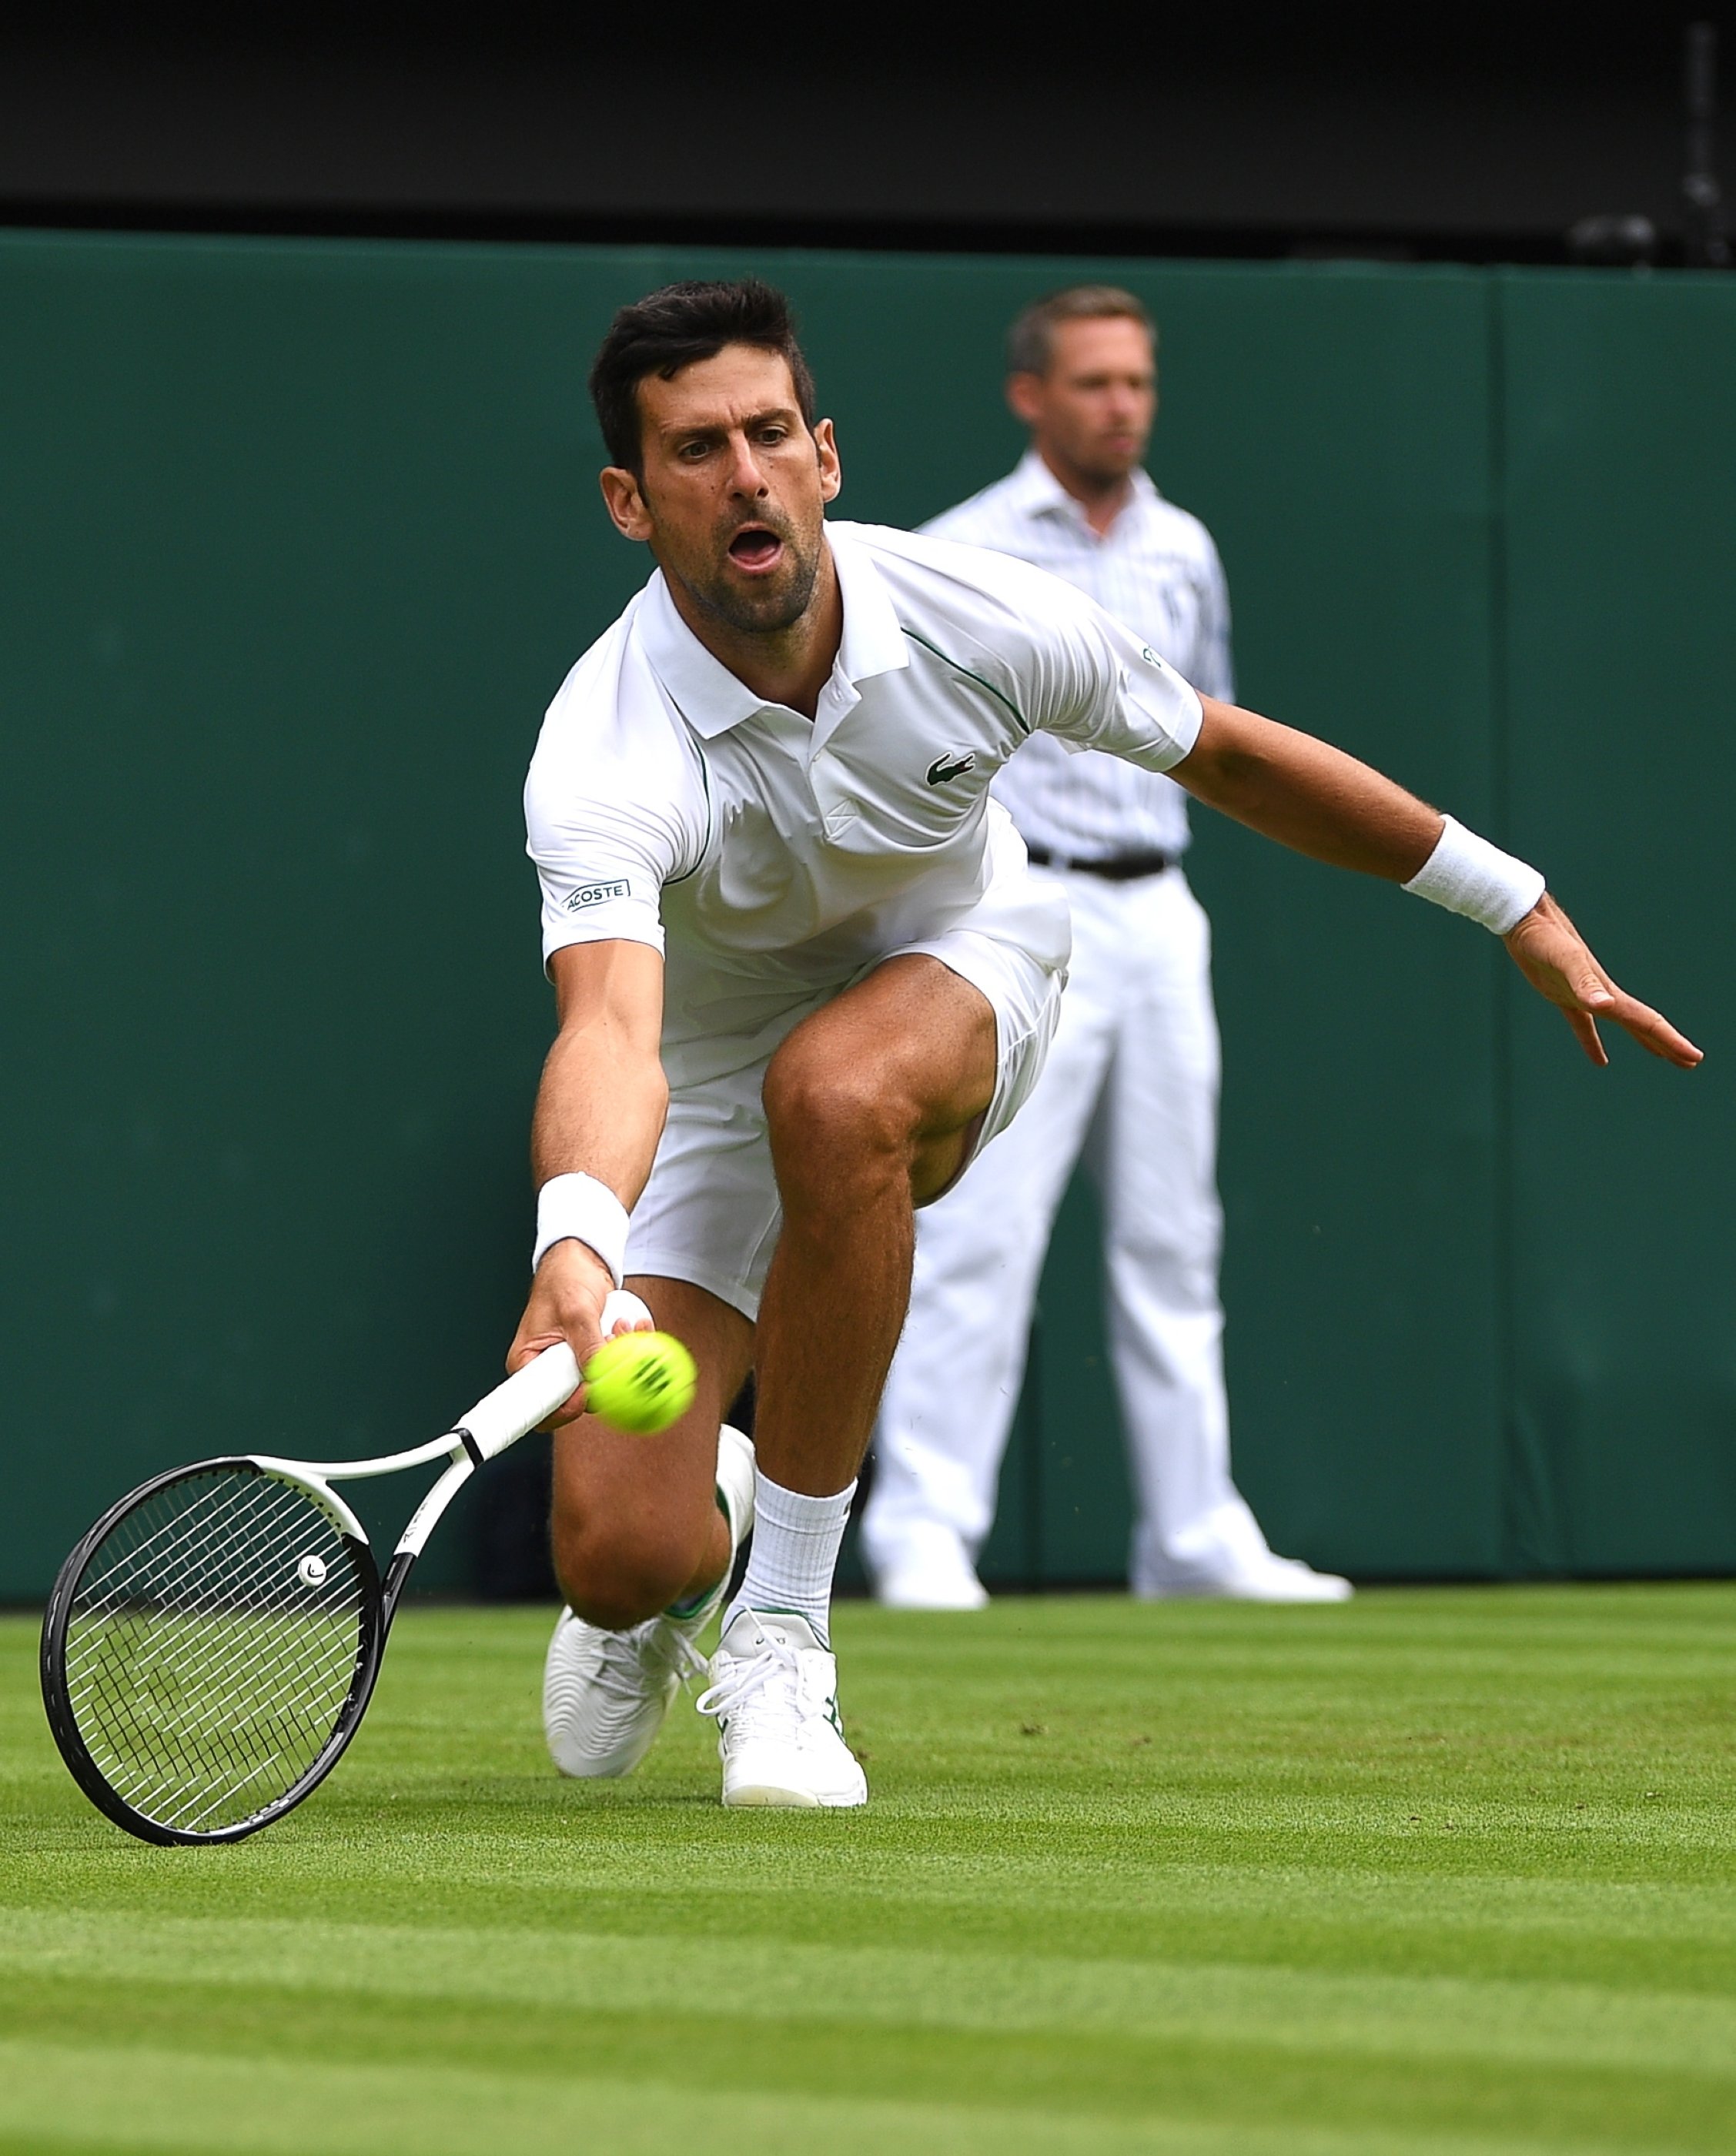 Petenis Serbia Novak Djokovic beraksi selama pertandingan putaran kedua Wimbledon melawan Thanasi Kokkinakis dari Australia, London, Inggris, 29 Juni 2022. (EPA Photo)